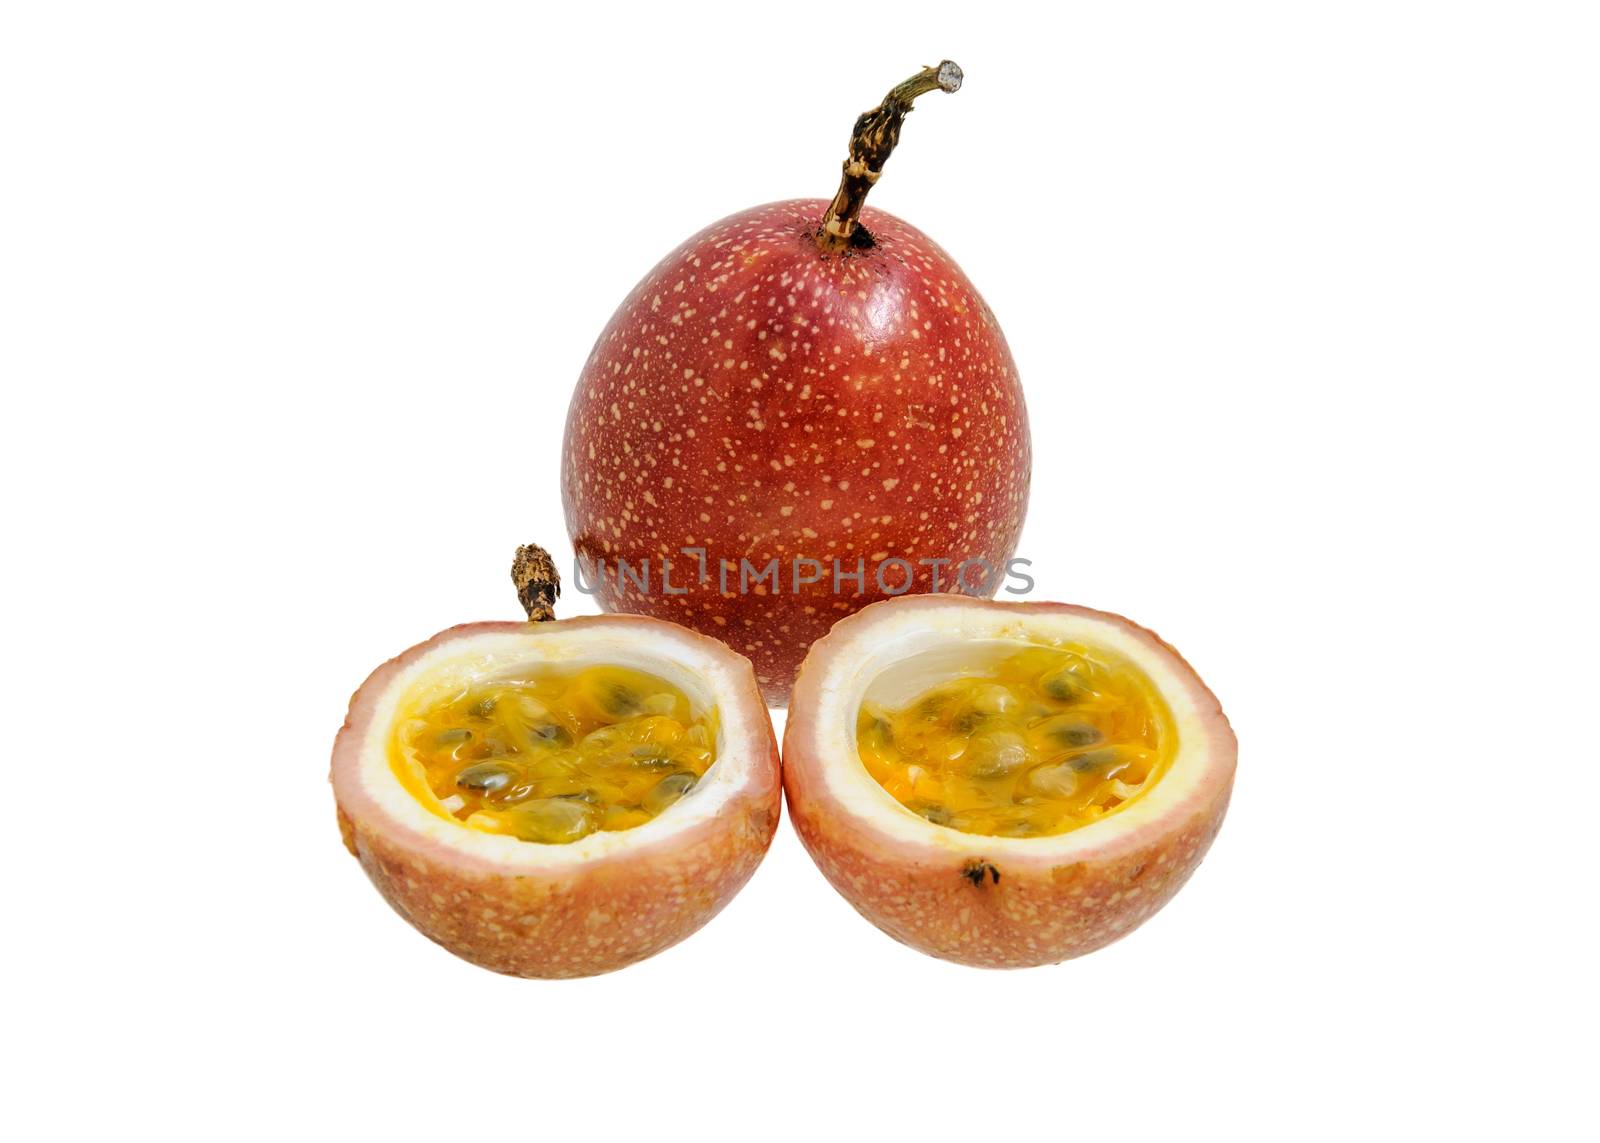 Passion fruit whole fruit and opened isolated on white background